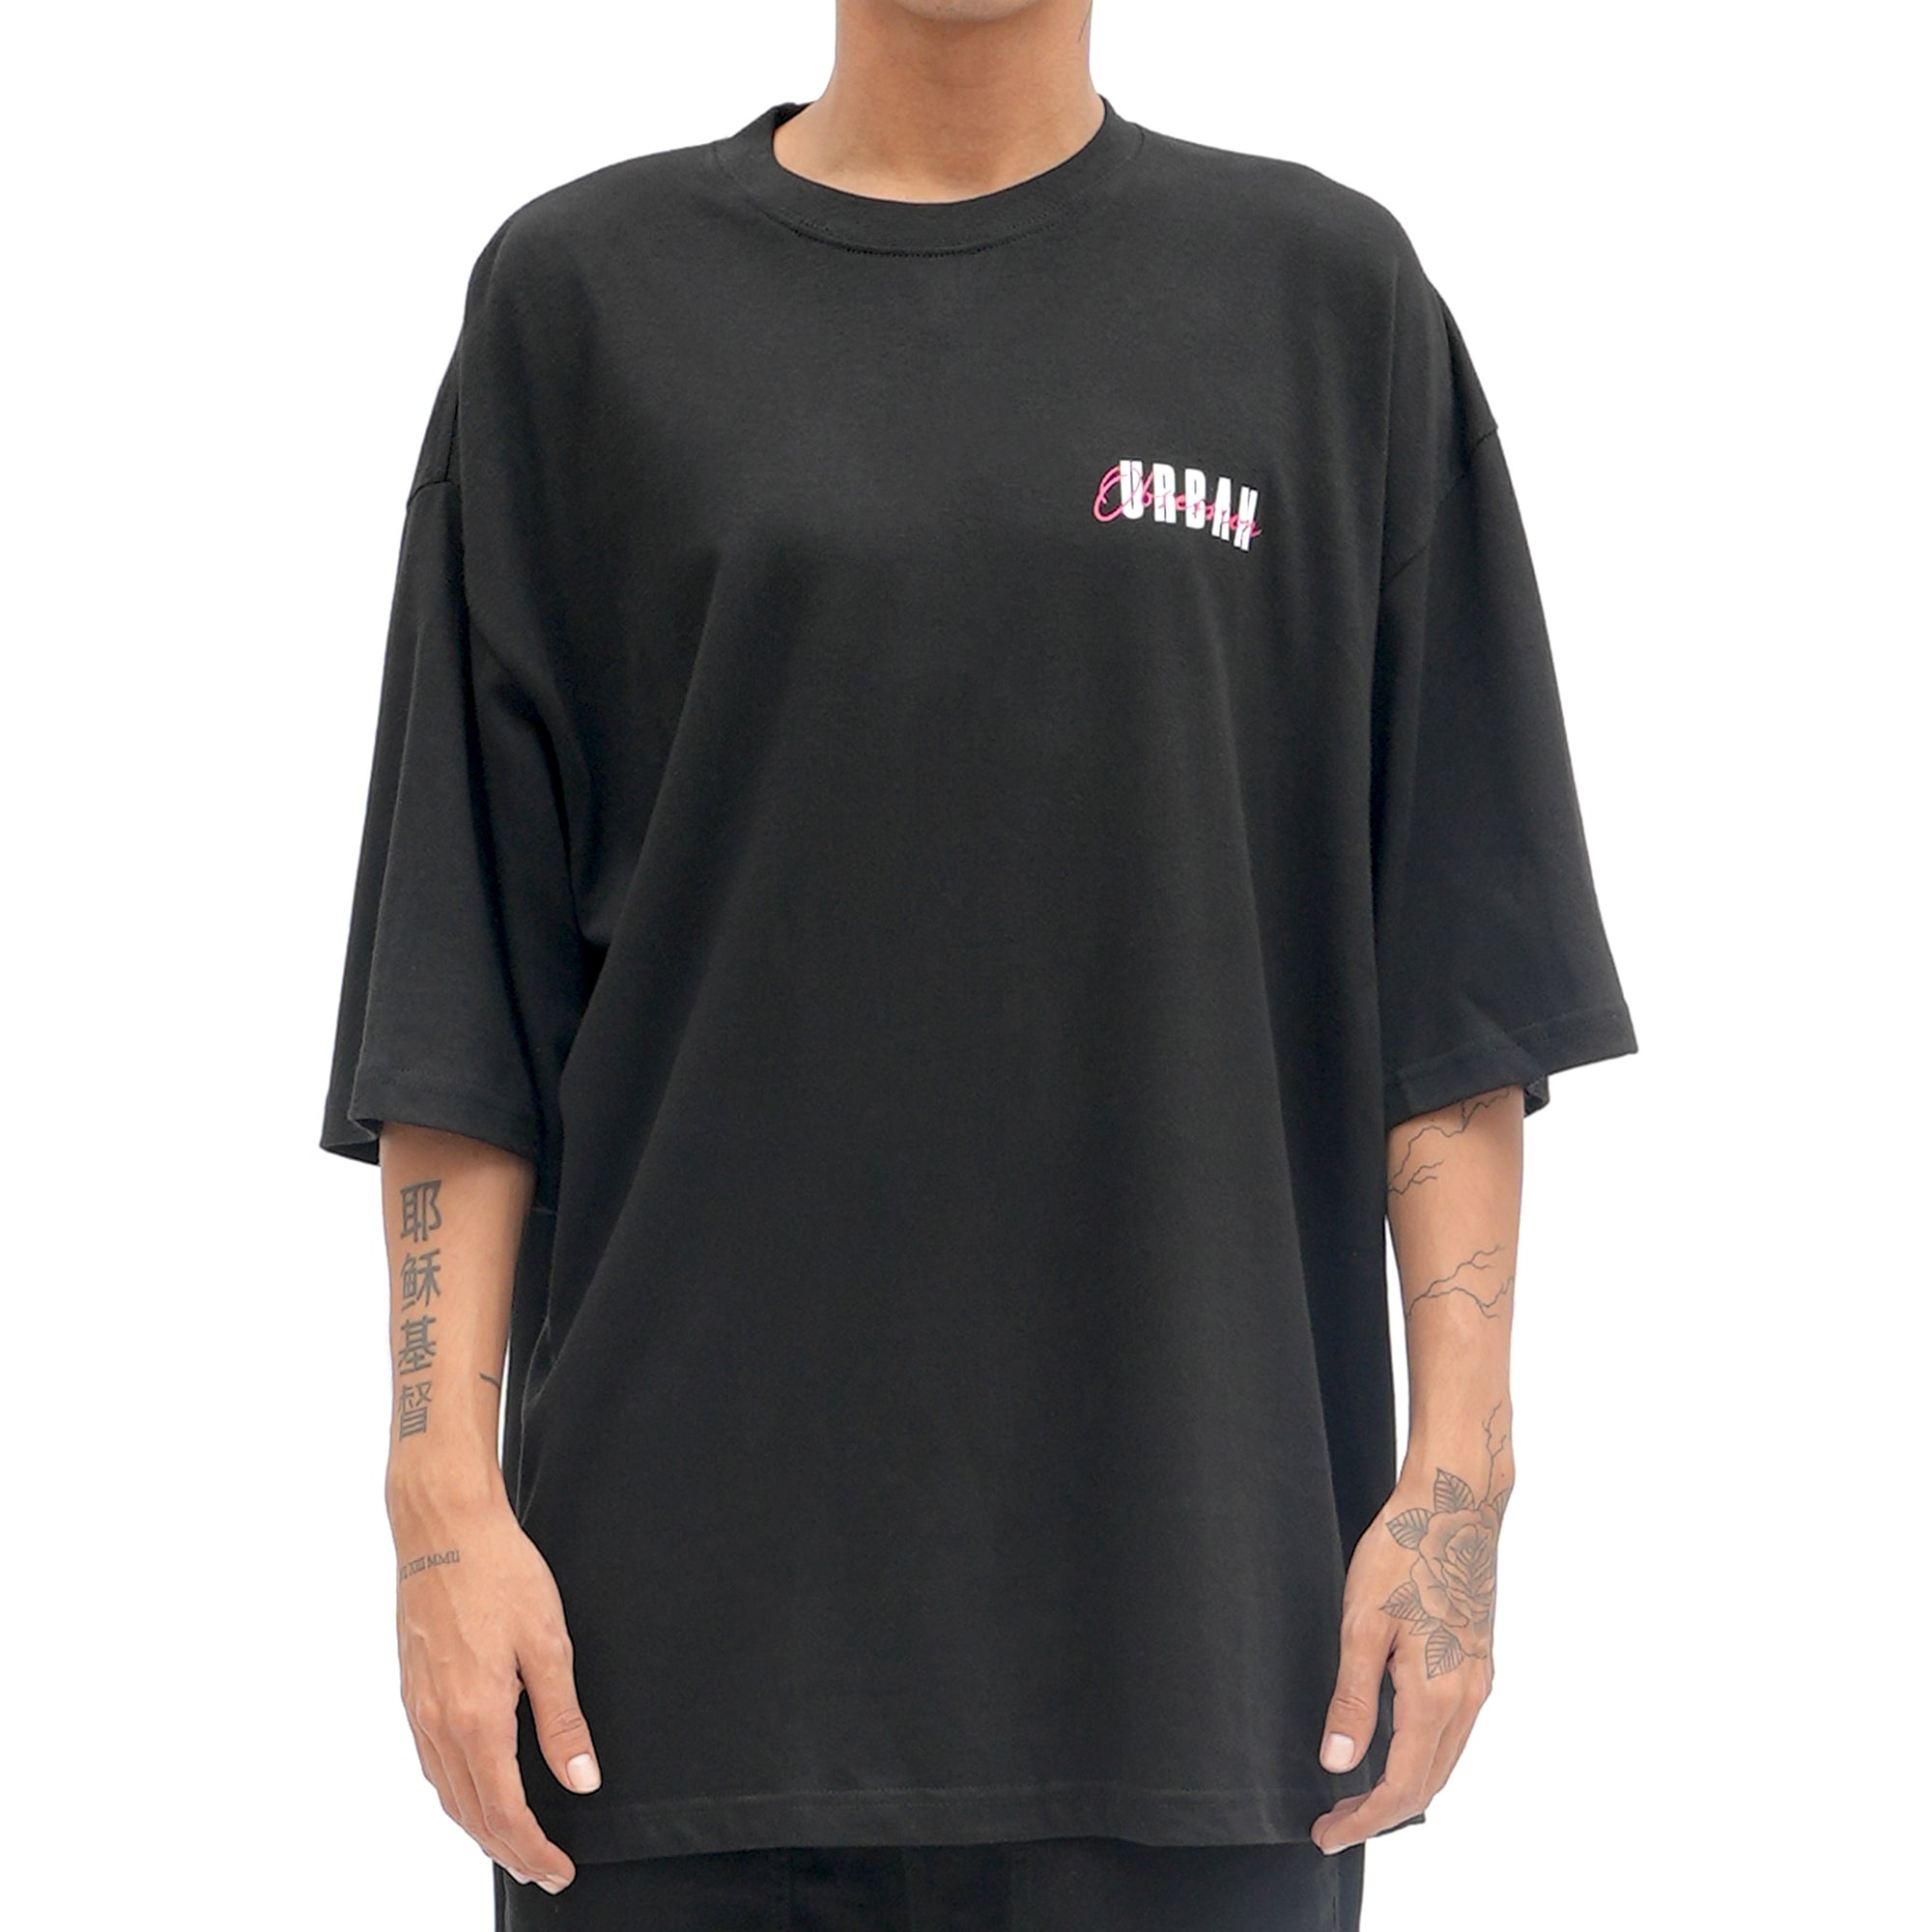 Roughneck OT155 Black Urban Obsession Oversize Tshirt